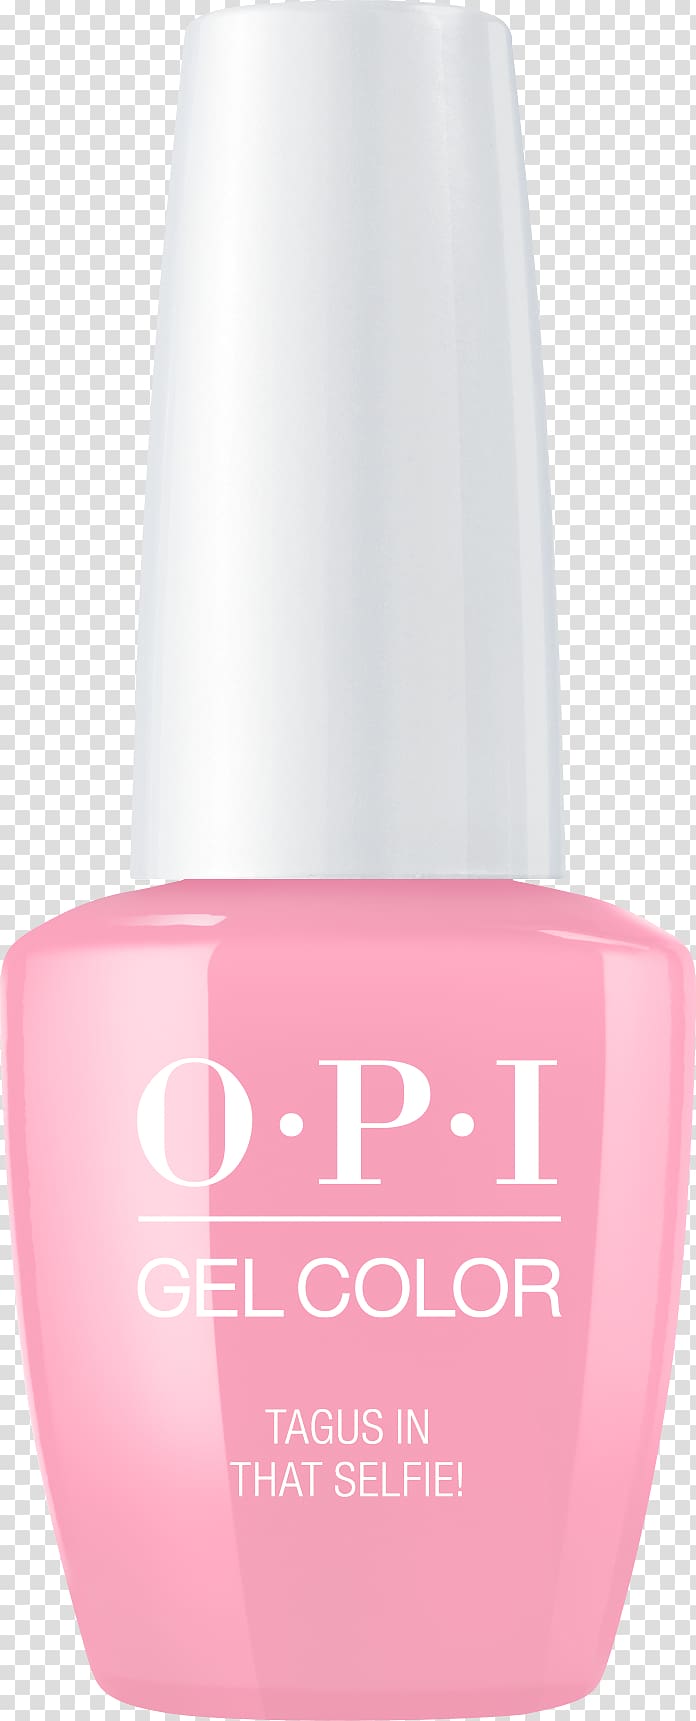 OPI Products OPI GelColor Gel nails Nail Polish, nail polish transparent background PNG clipart